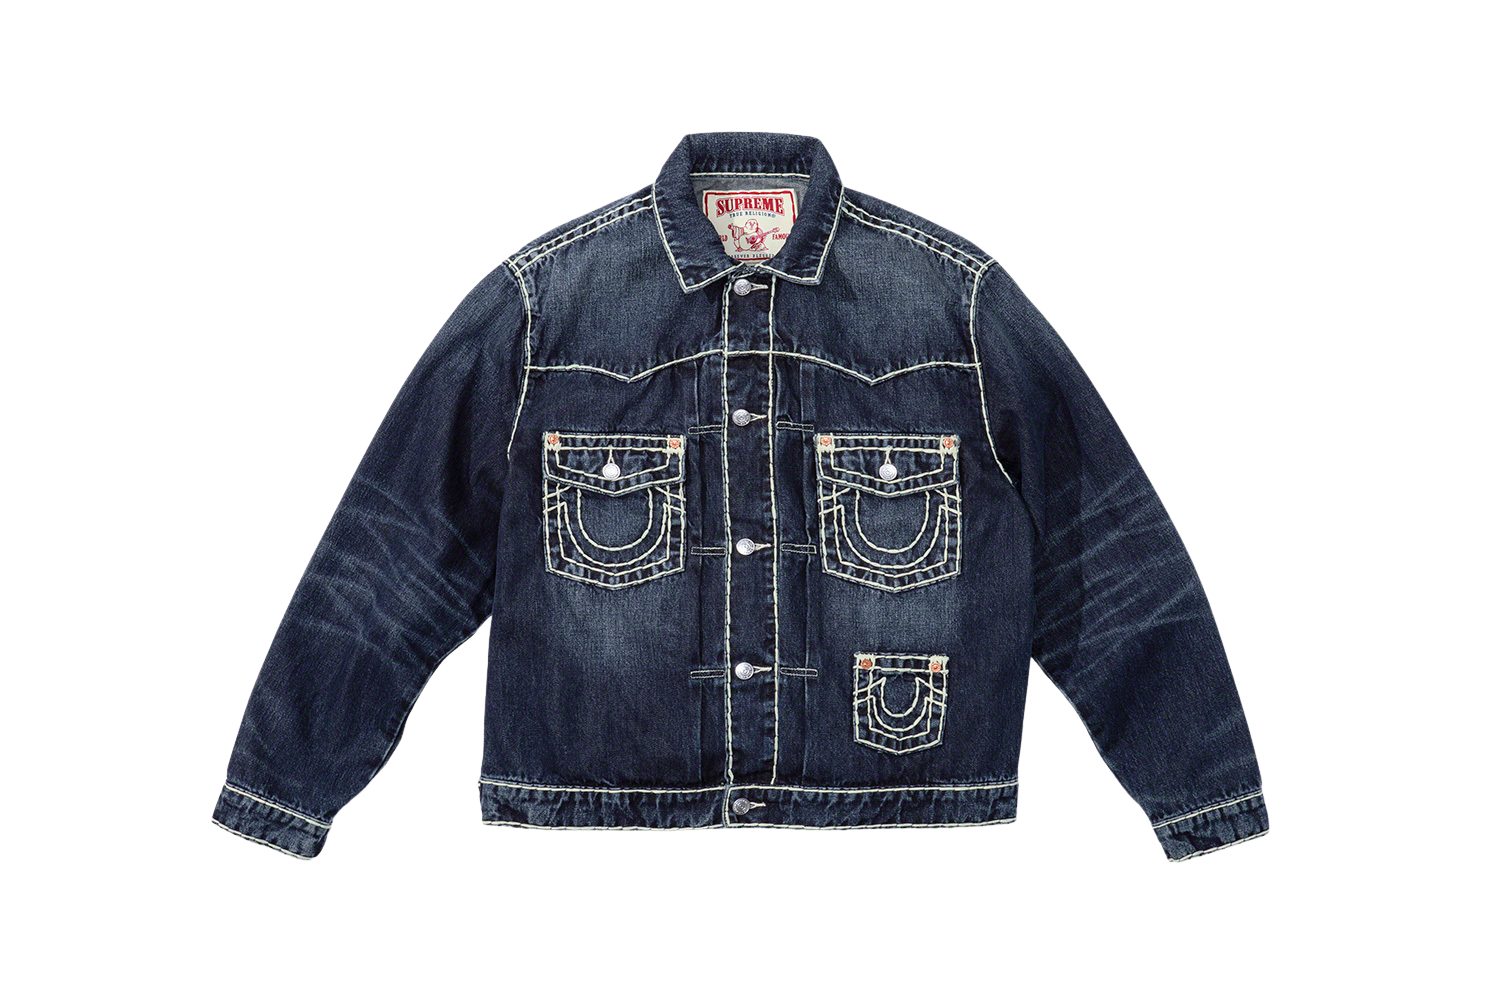 New True Religion Jimmy SN Denim Jacket XL Light Wash $159.00 | eBay